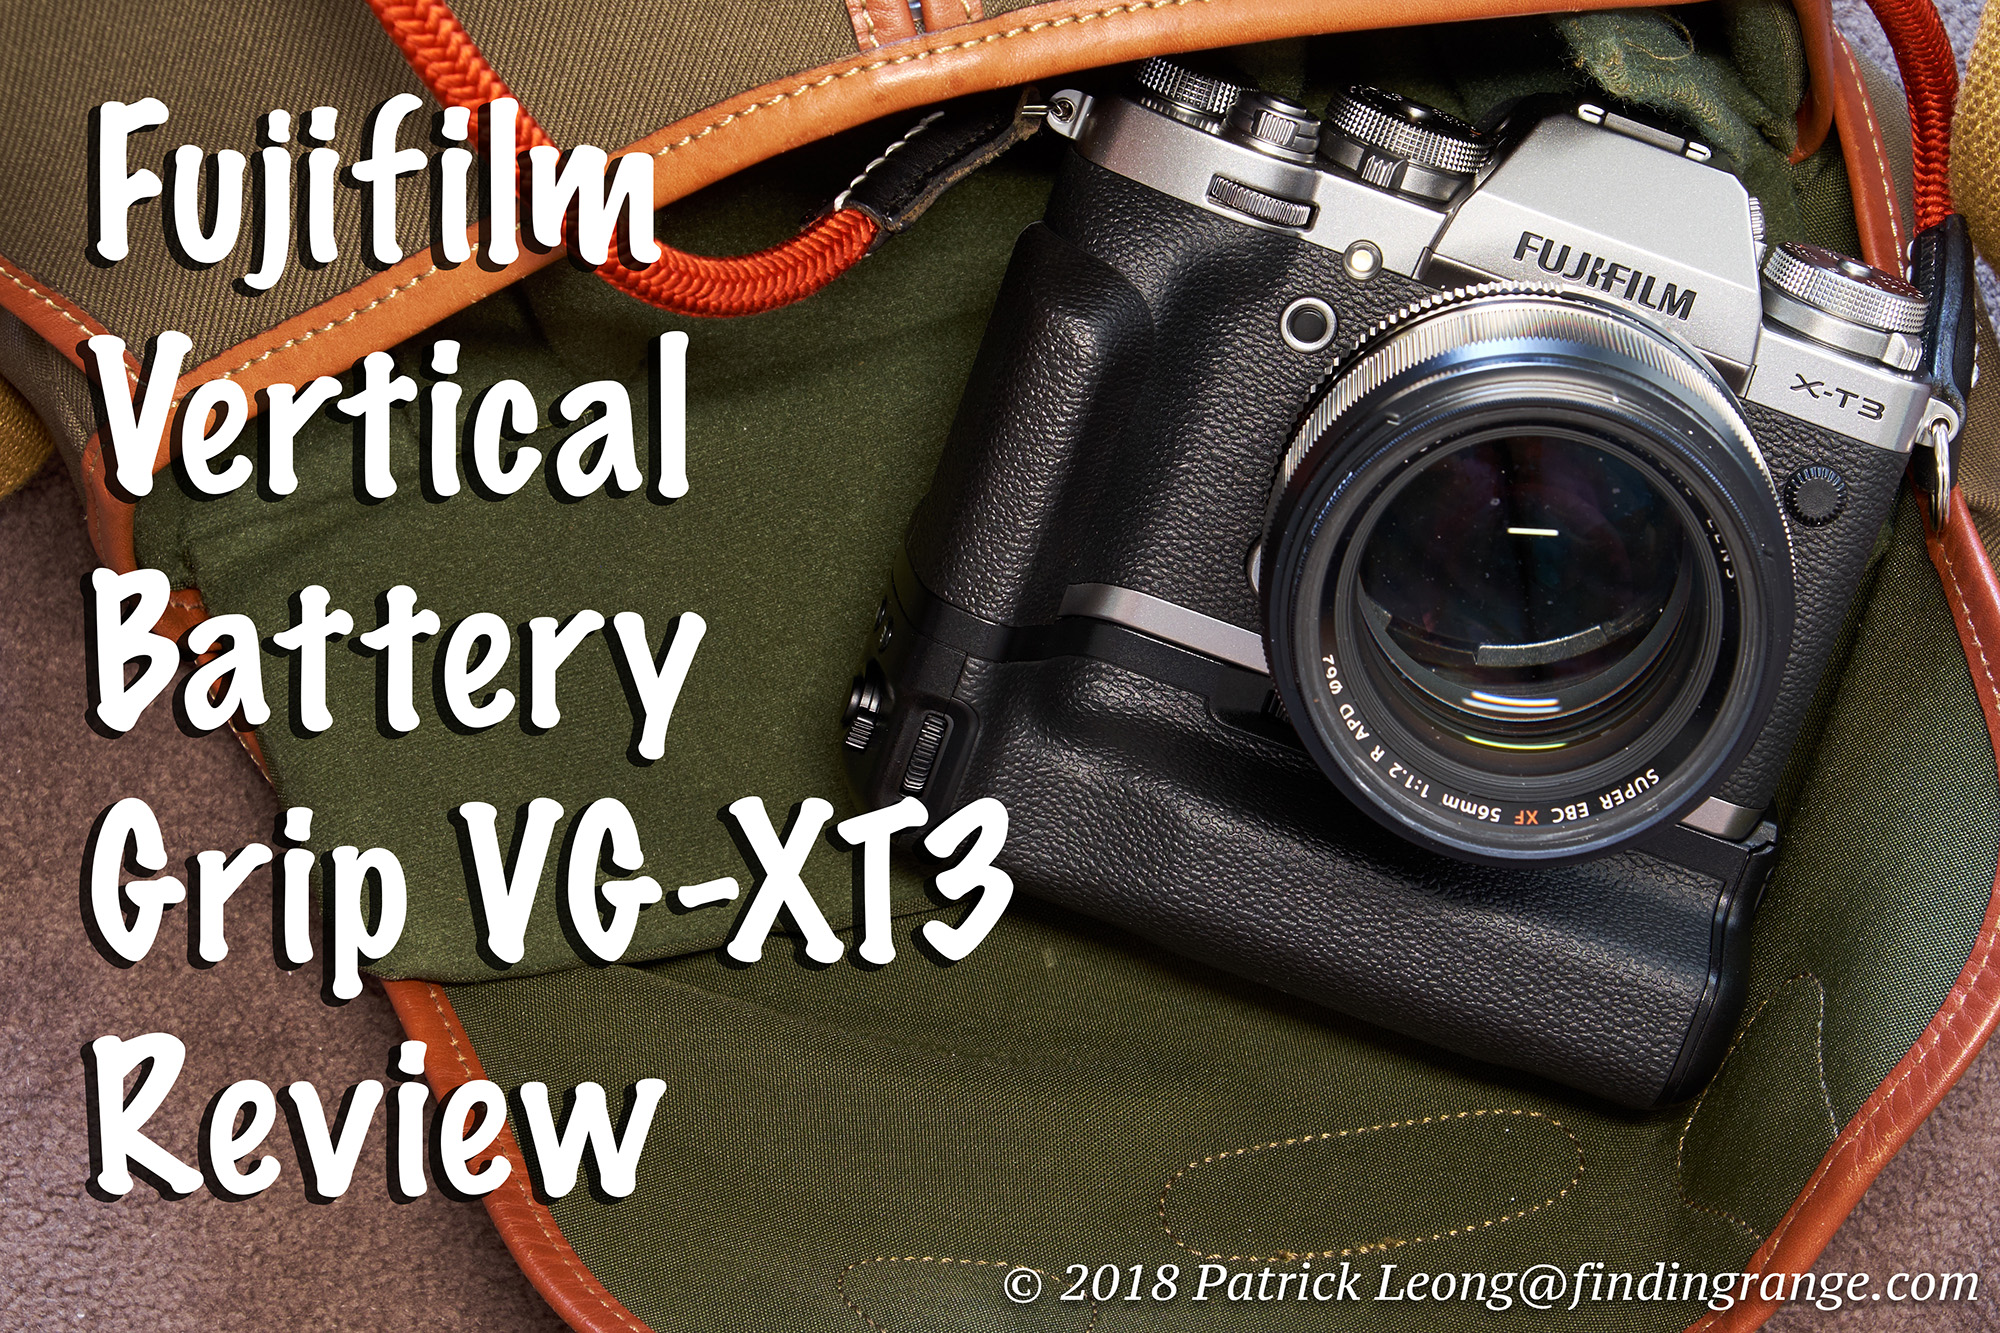 Fujifilm Vertical Battery Grip VG-XT3 Review